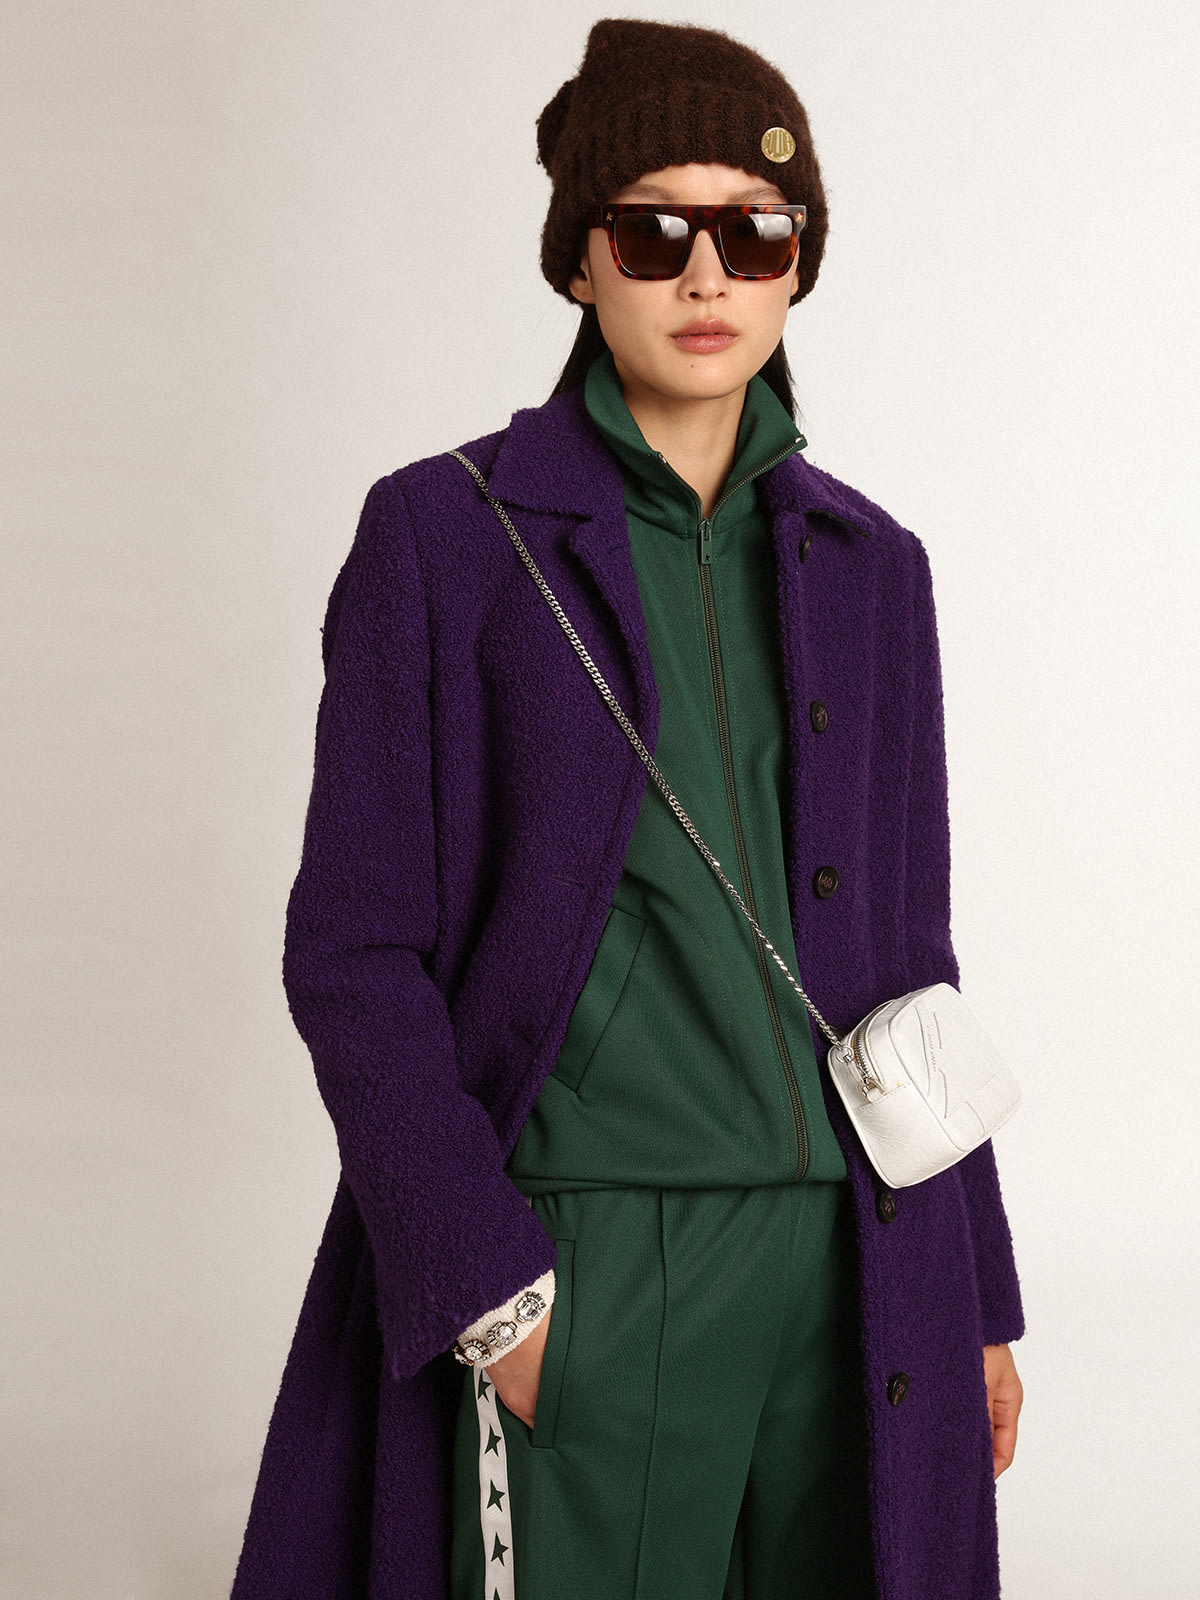 Golden Goose - Abrigo de lana púrpura índigo y forro estampado para mujer in 